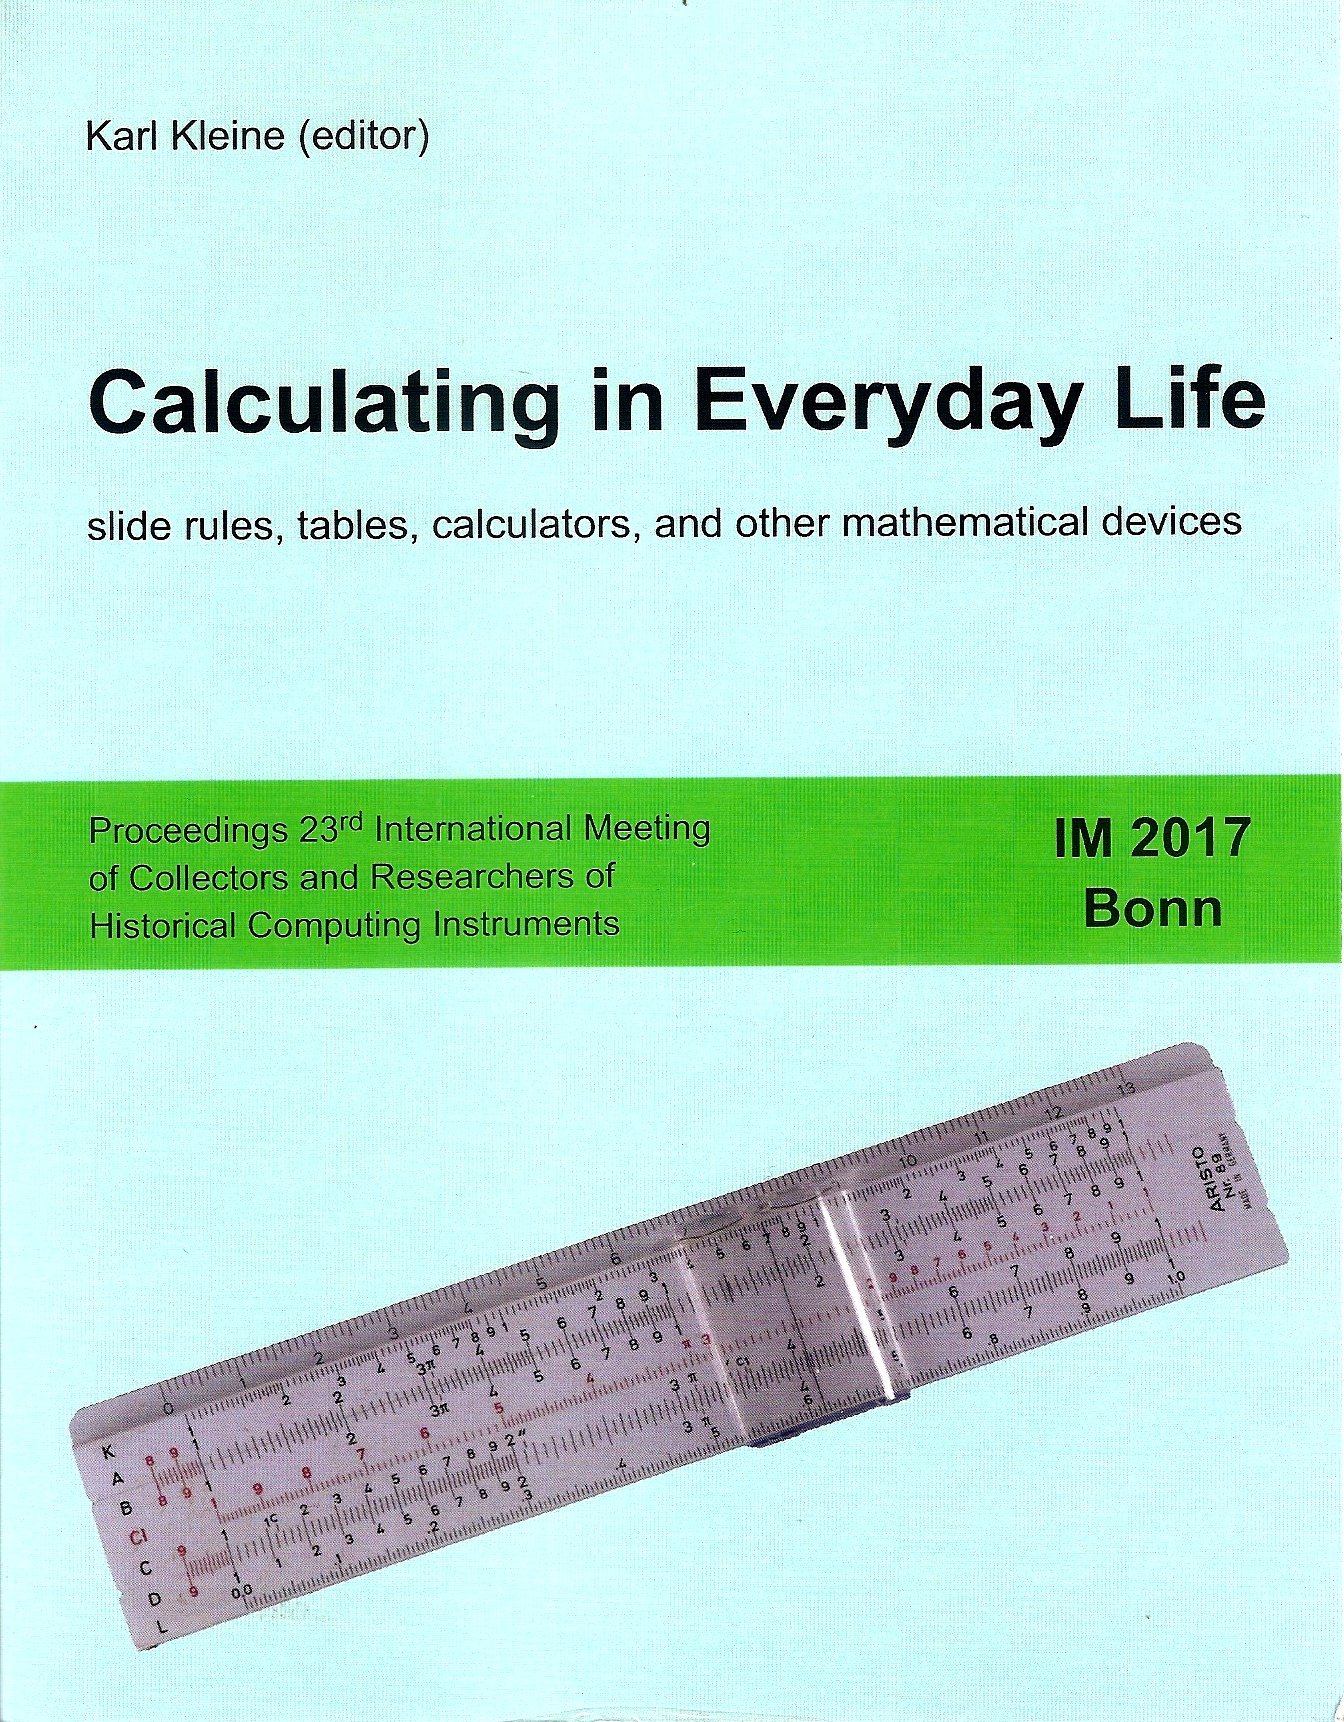 IM2017 Proceedings cover